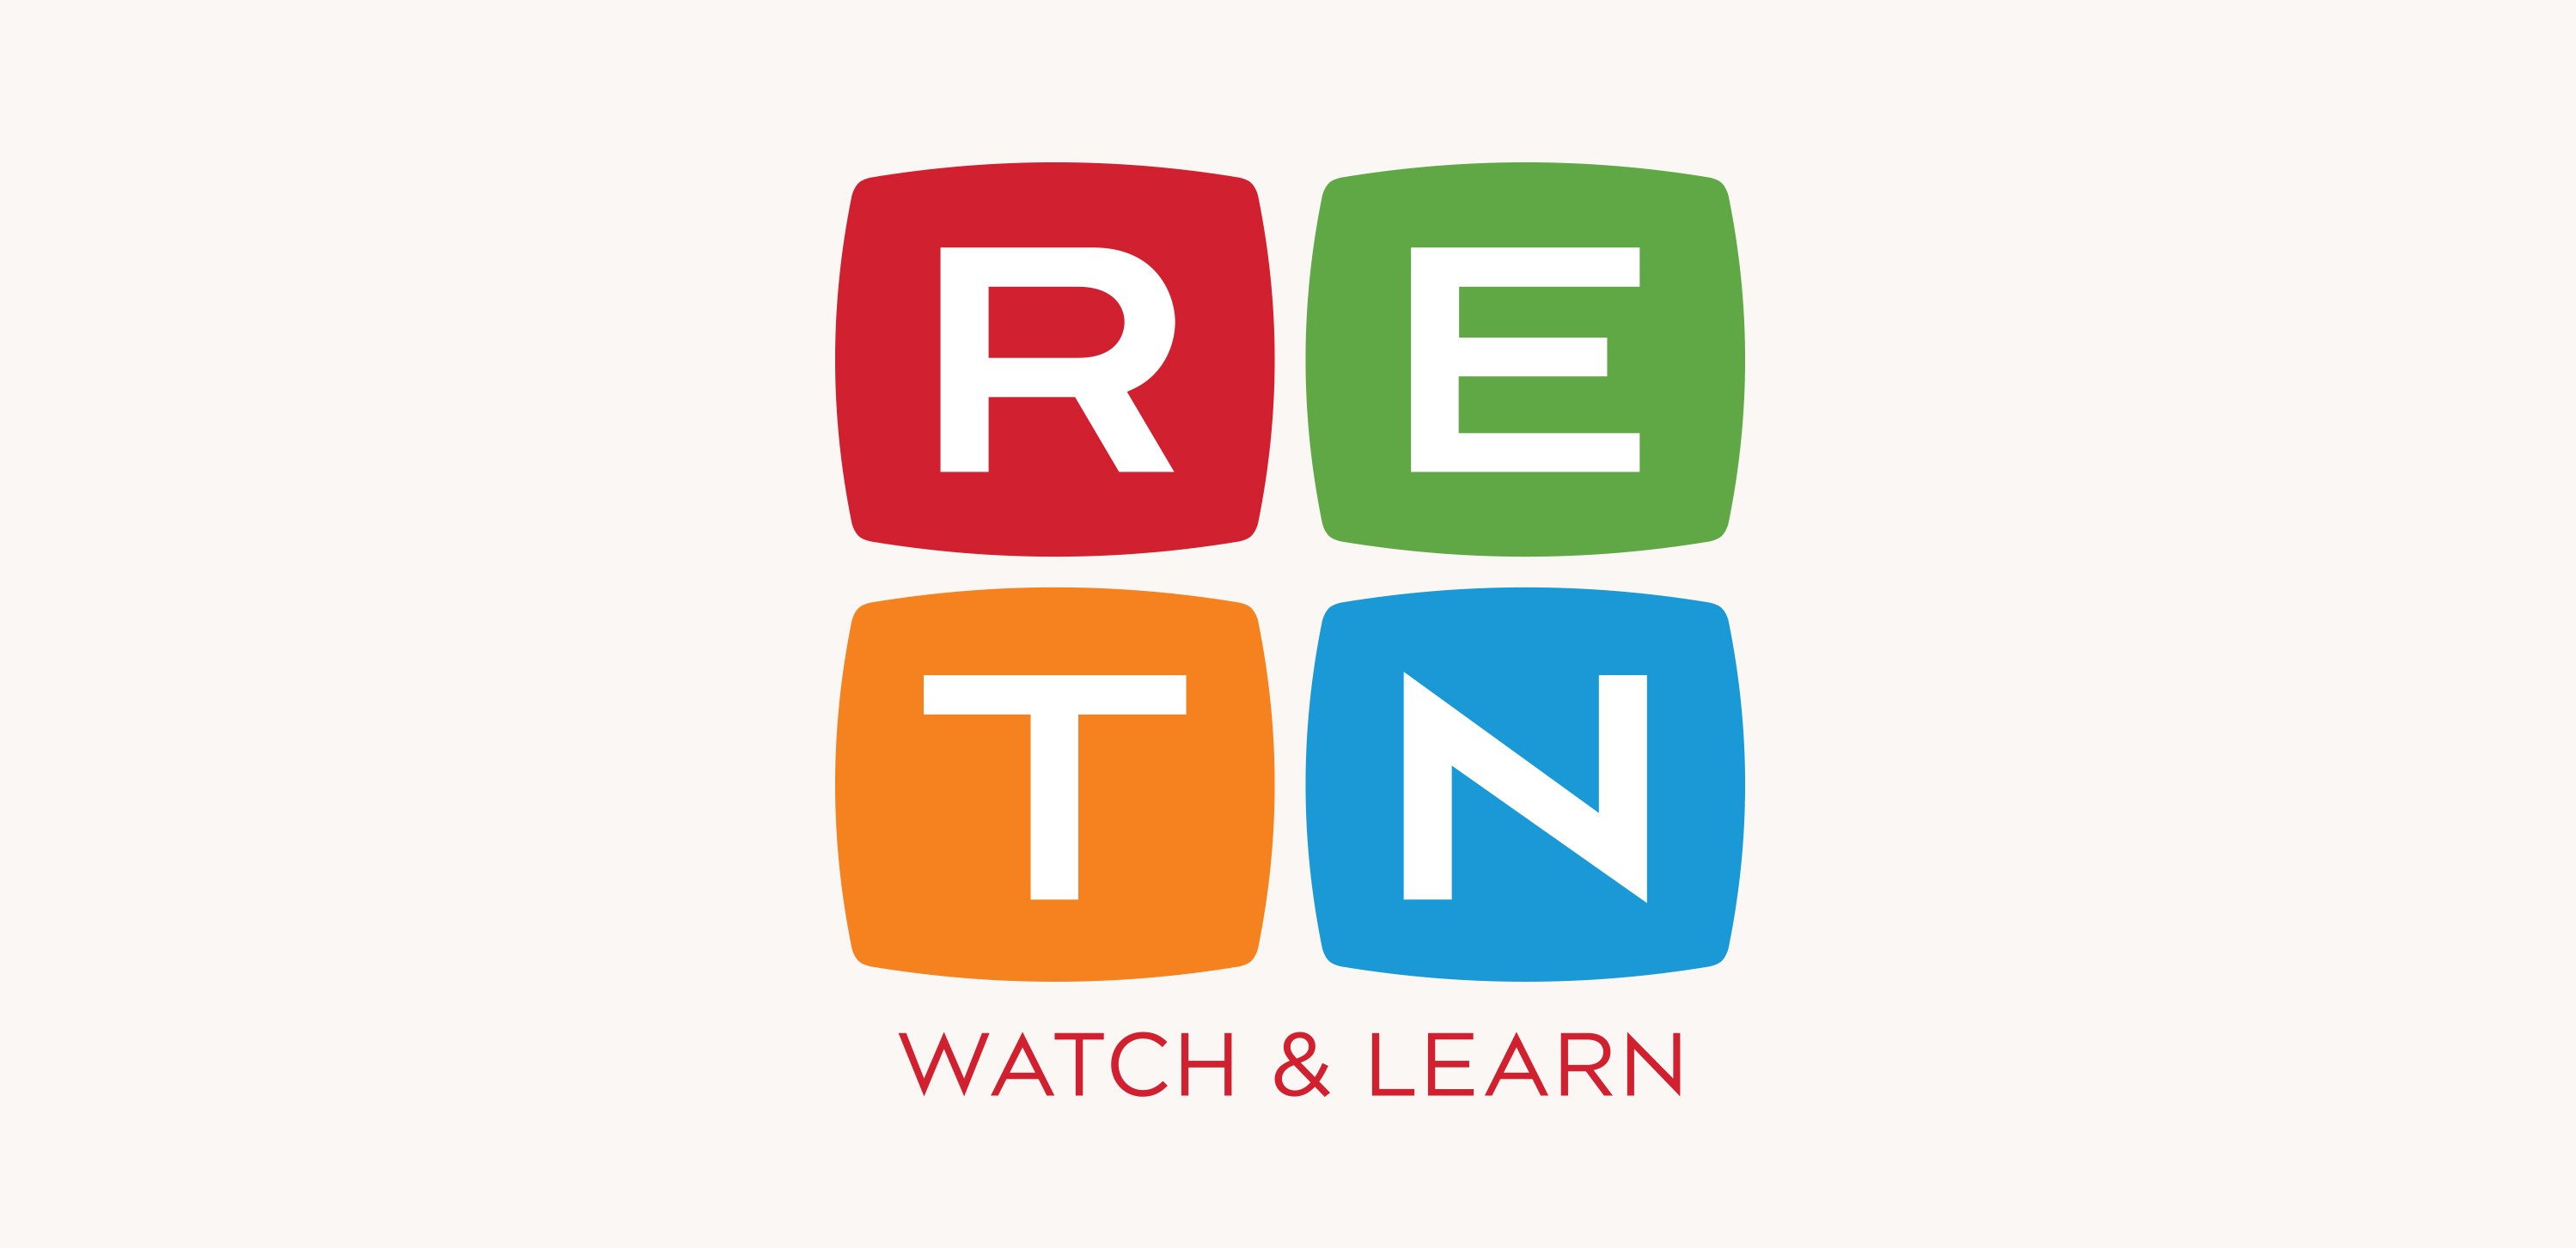 RETN logo design